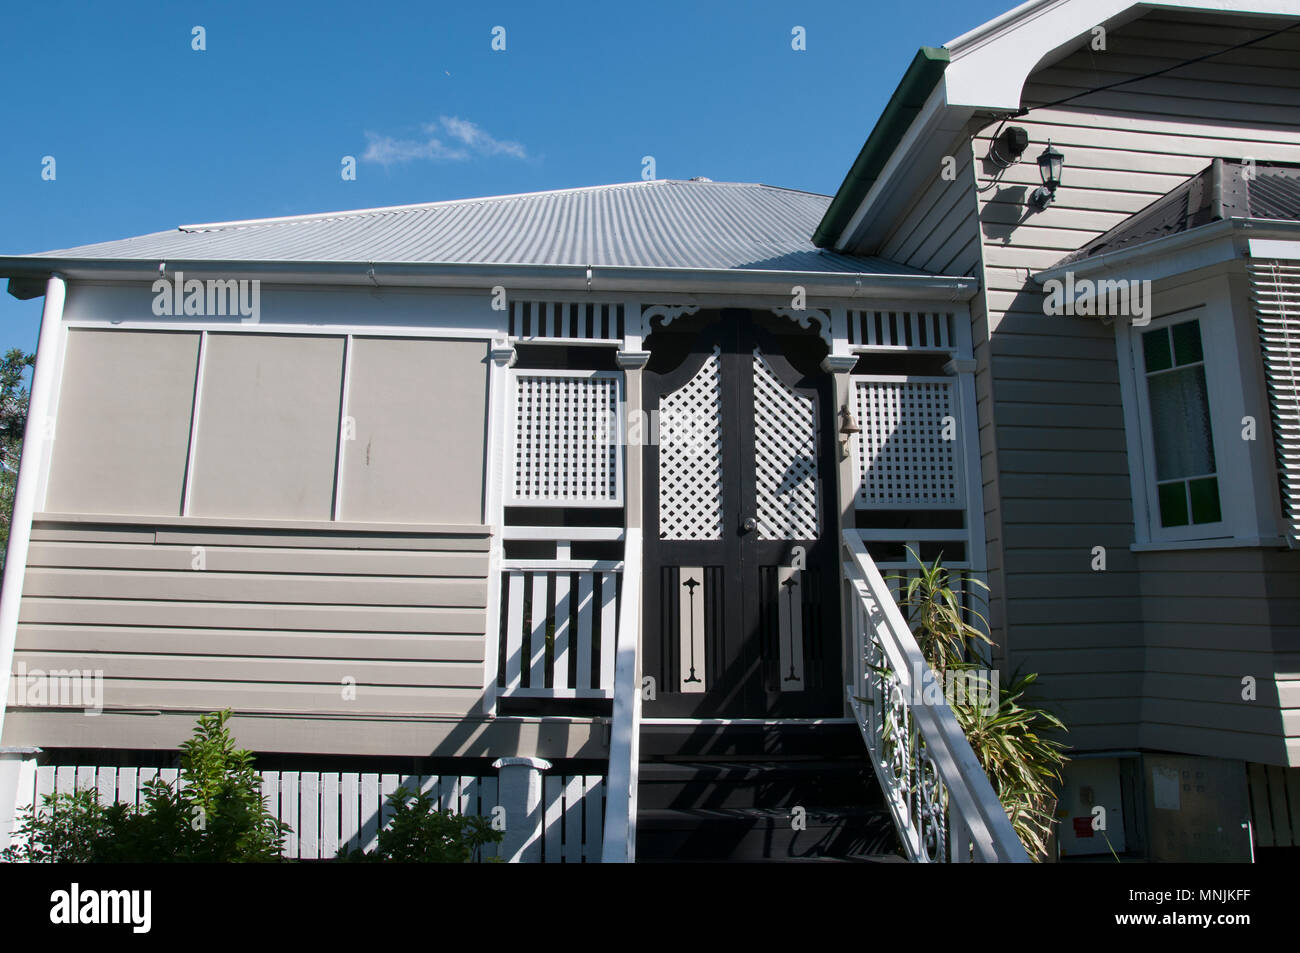 Queenslander-style timber home ca. 1913, typically featuring Art Nouveau decorative motifs, Brisbane, Australia Stock Photo